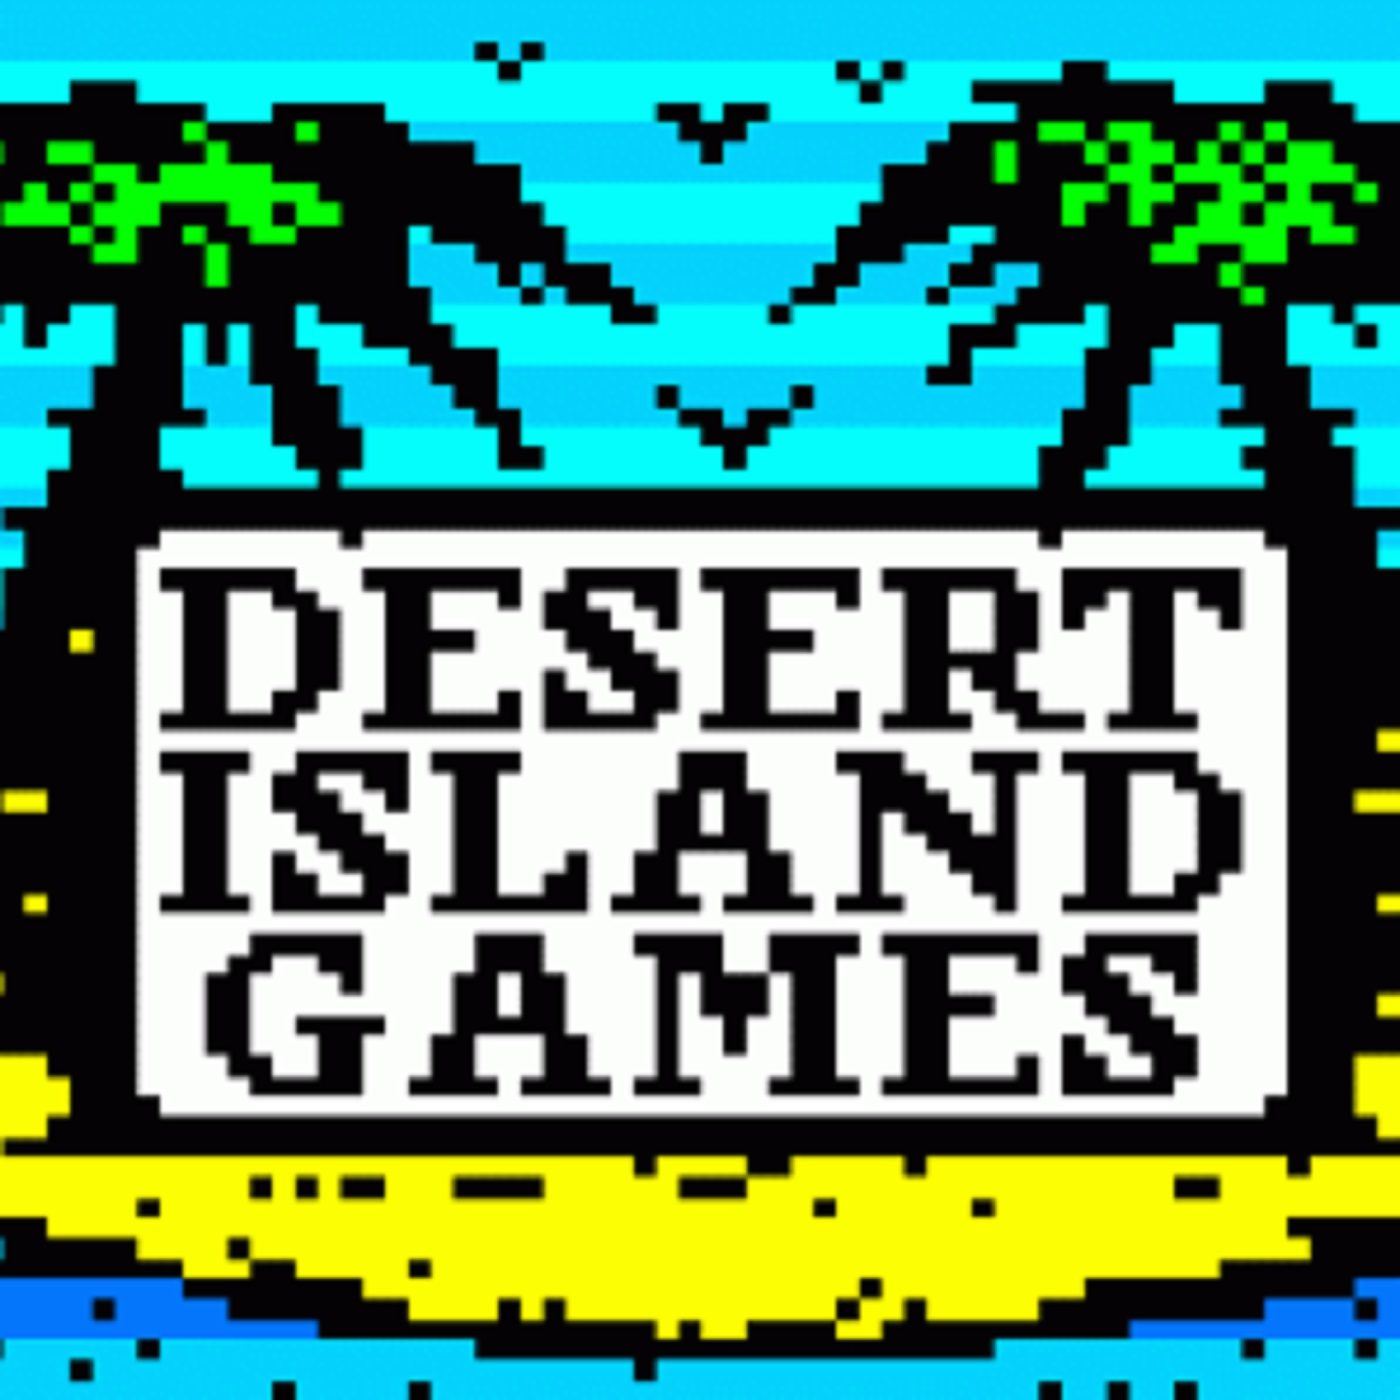 Desert Island Games